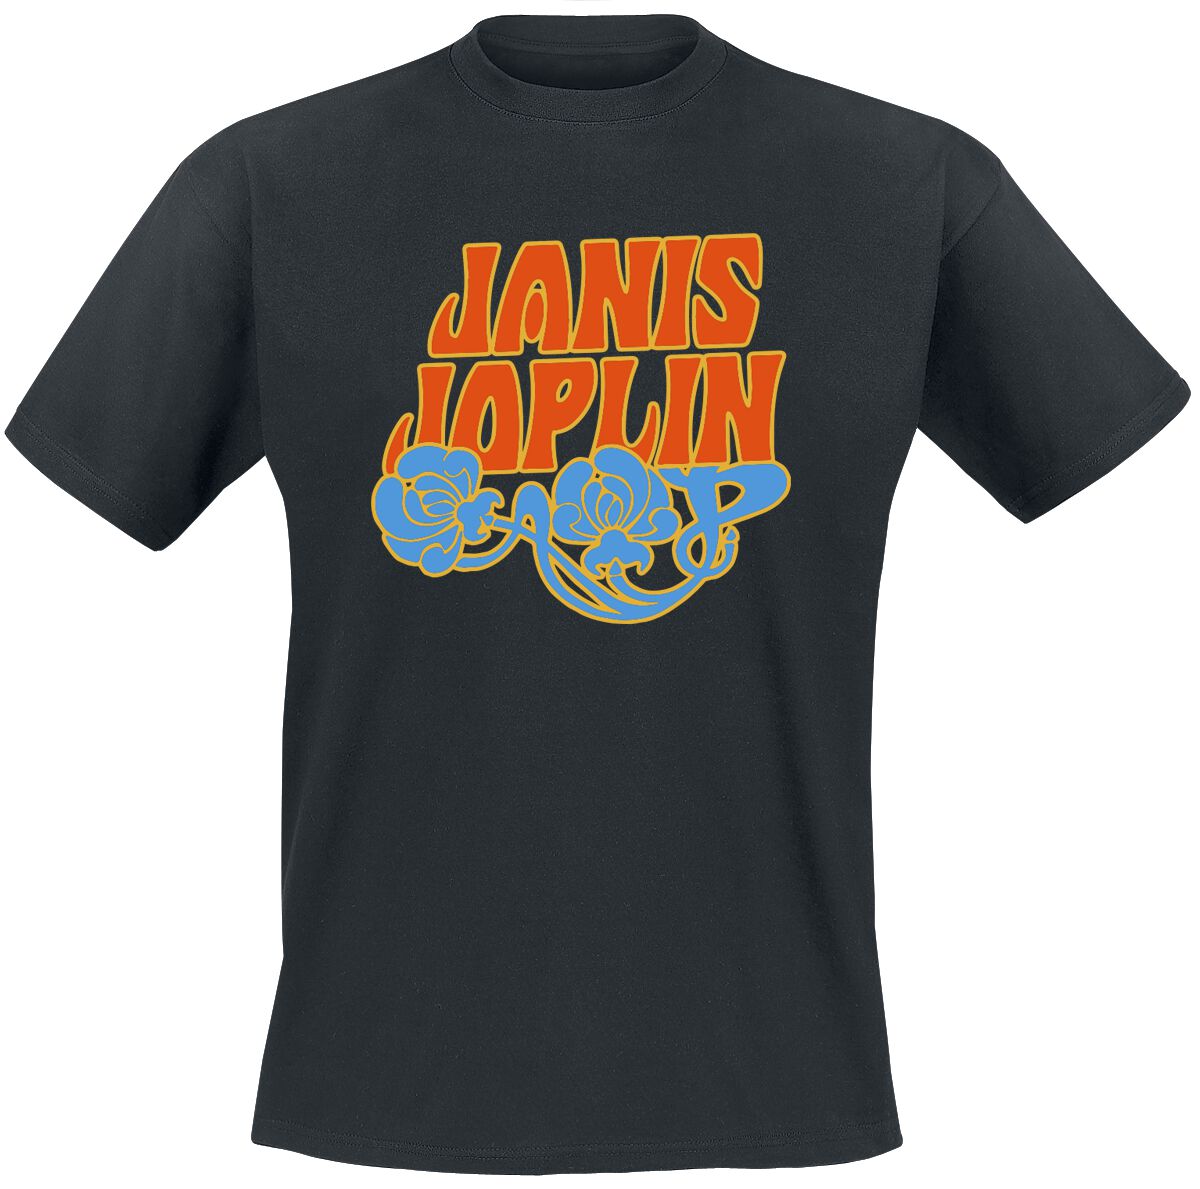 Image of T-Shirt di Joplin, Janis - Floral Logo - S a XXL - Uomo - nero